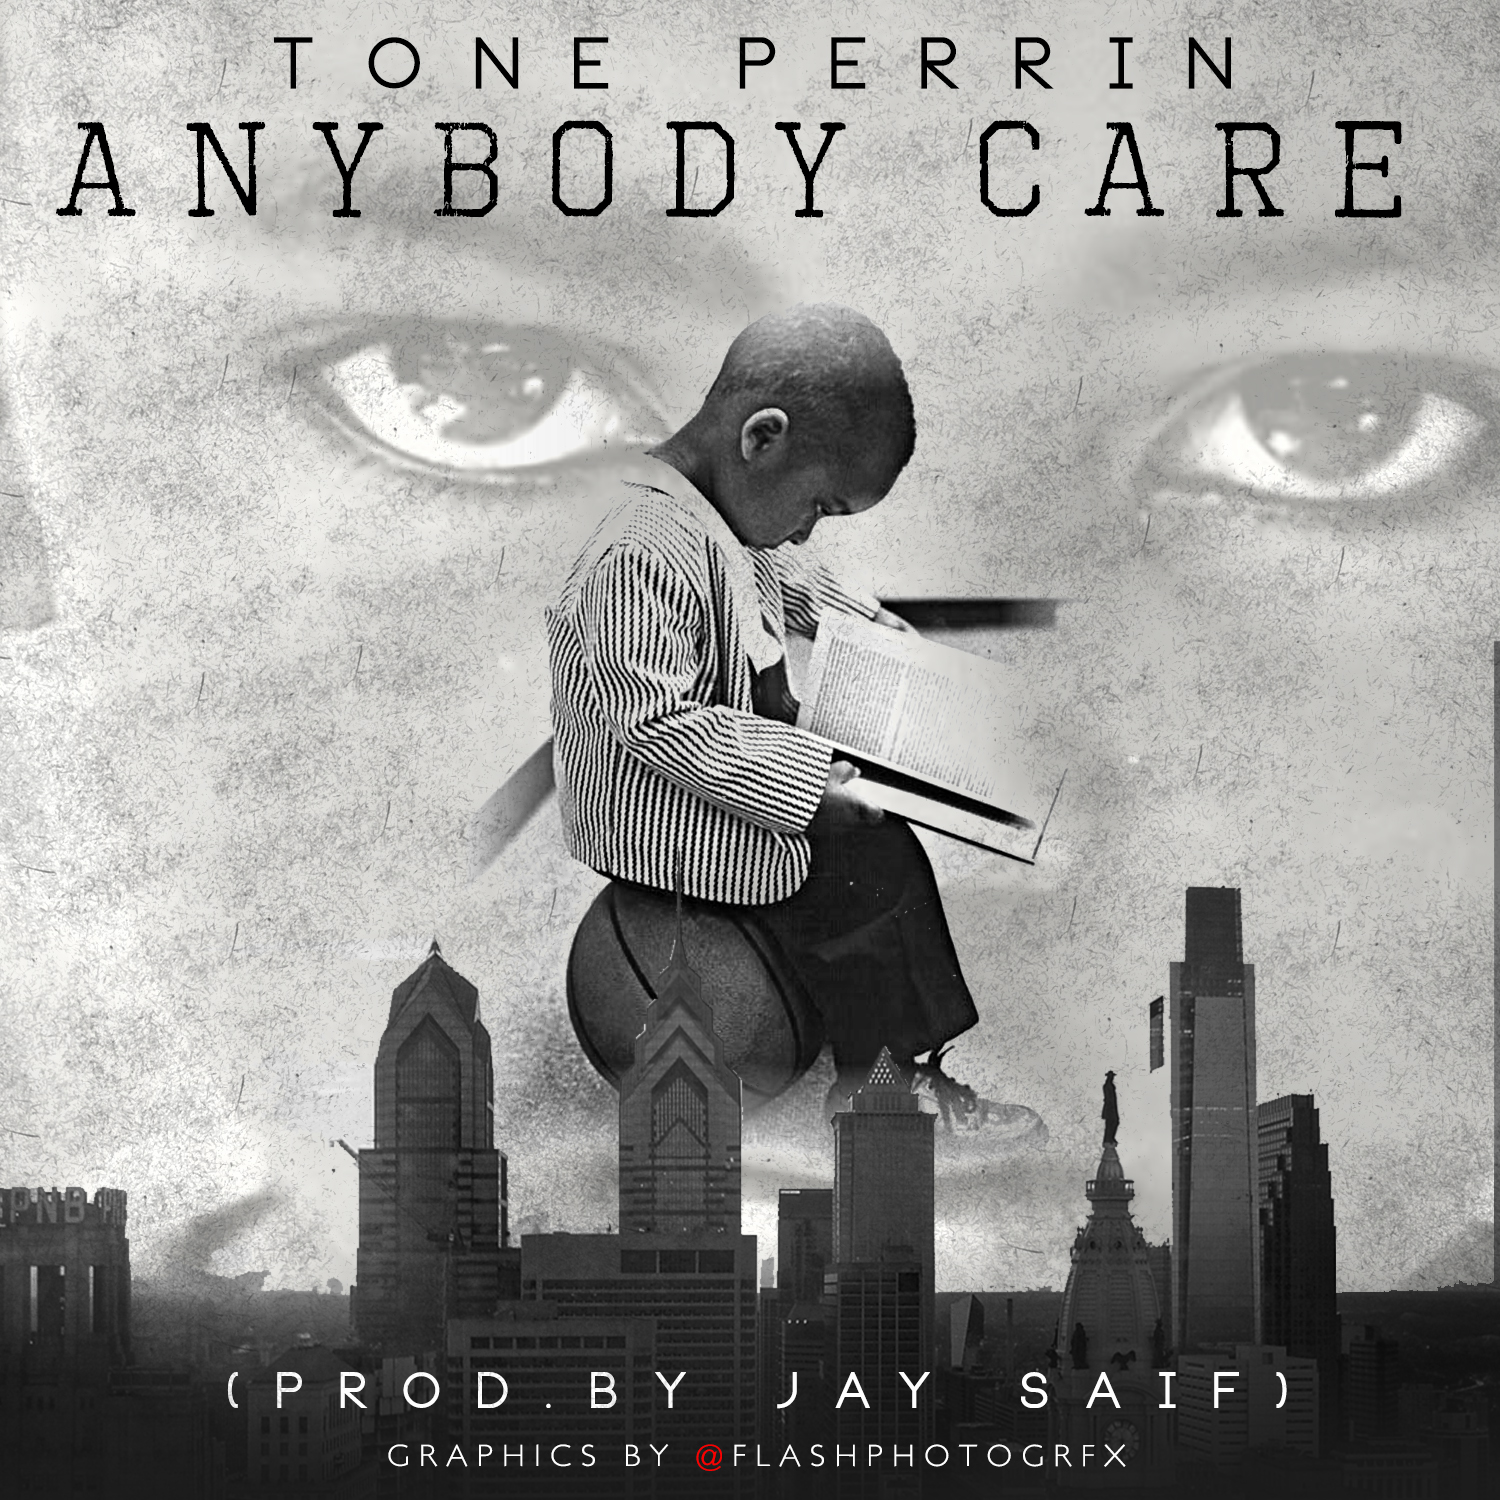 tone-perrin-anybody-care-prod-by-jay-saif-HHS1987-2013 Tone Perrin - Anybody Care (Prod by Jay Saif)  